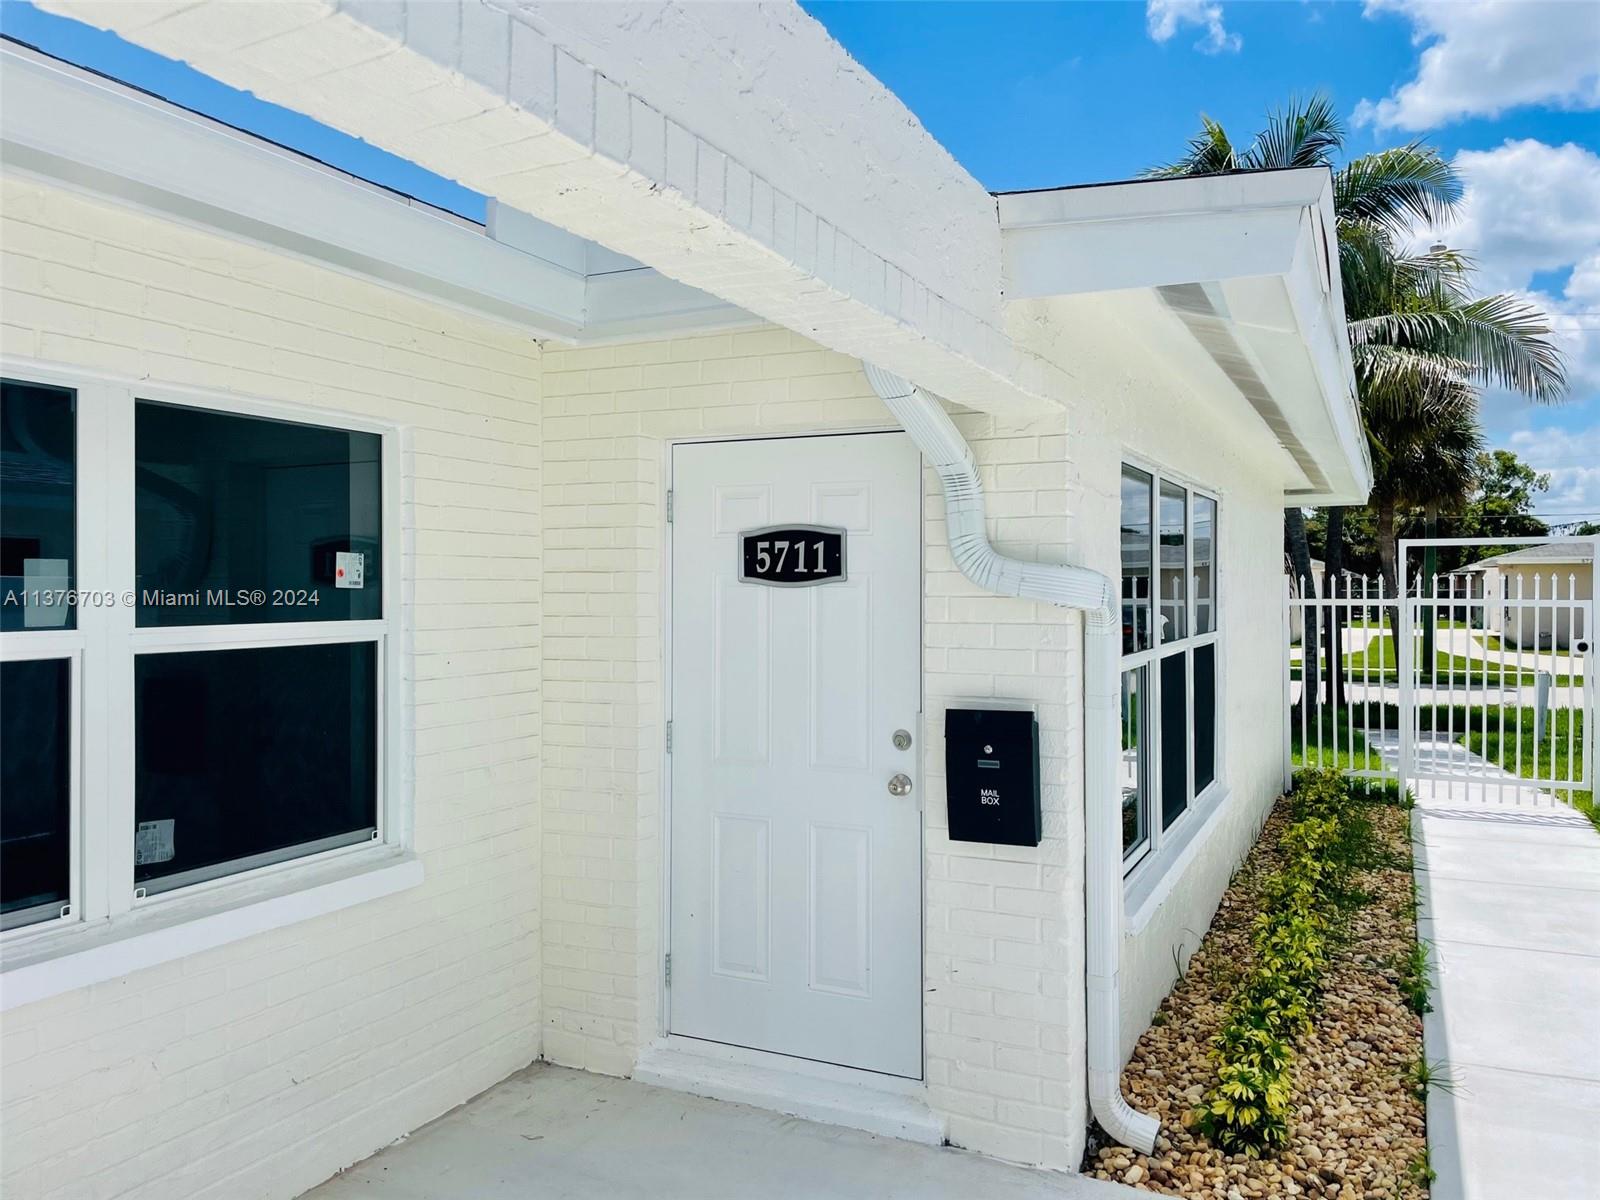 Rental Property at 5721 Nw 28th St St, Lauderhill, Miami-Dade County, Florida -  - $1,026,000 MO.